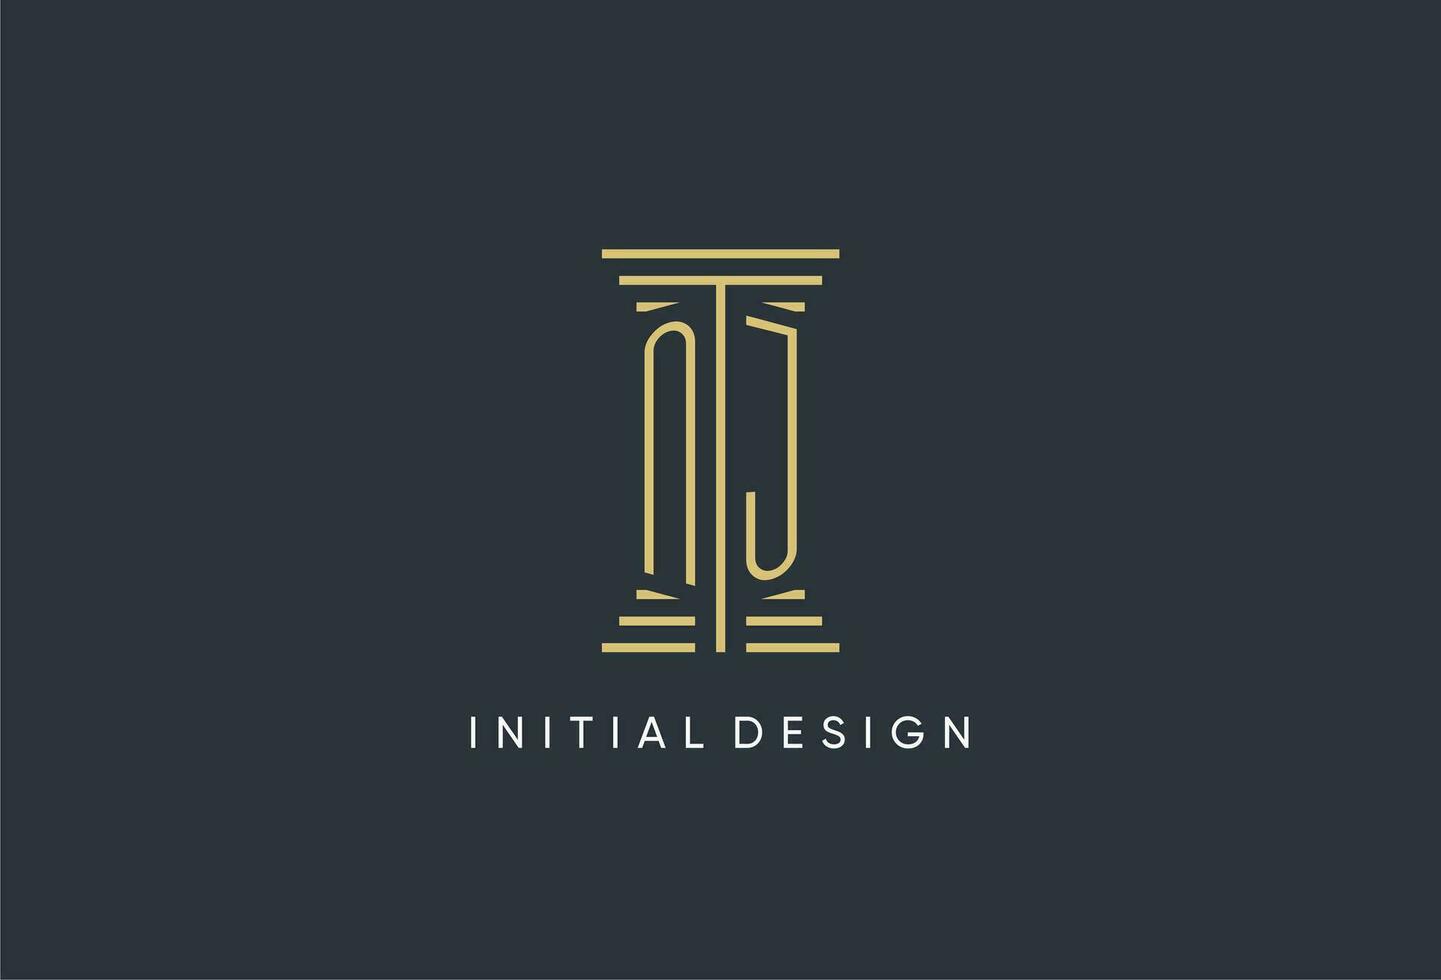 NJ initial monogram with pillar shape logo design vector